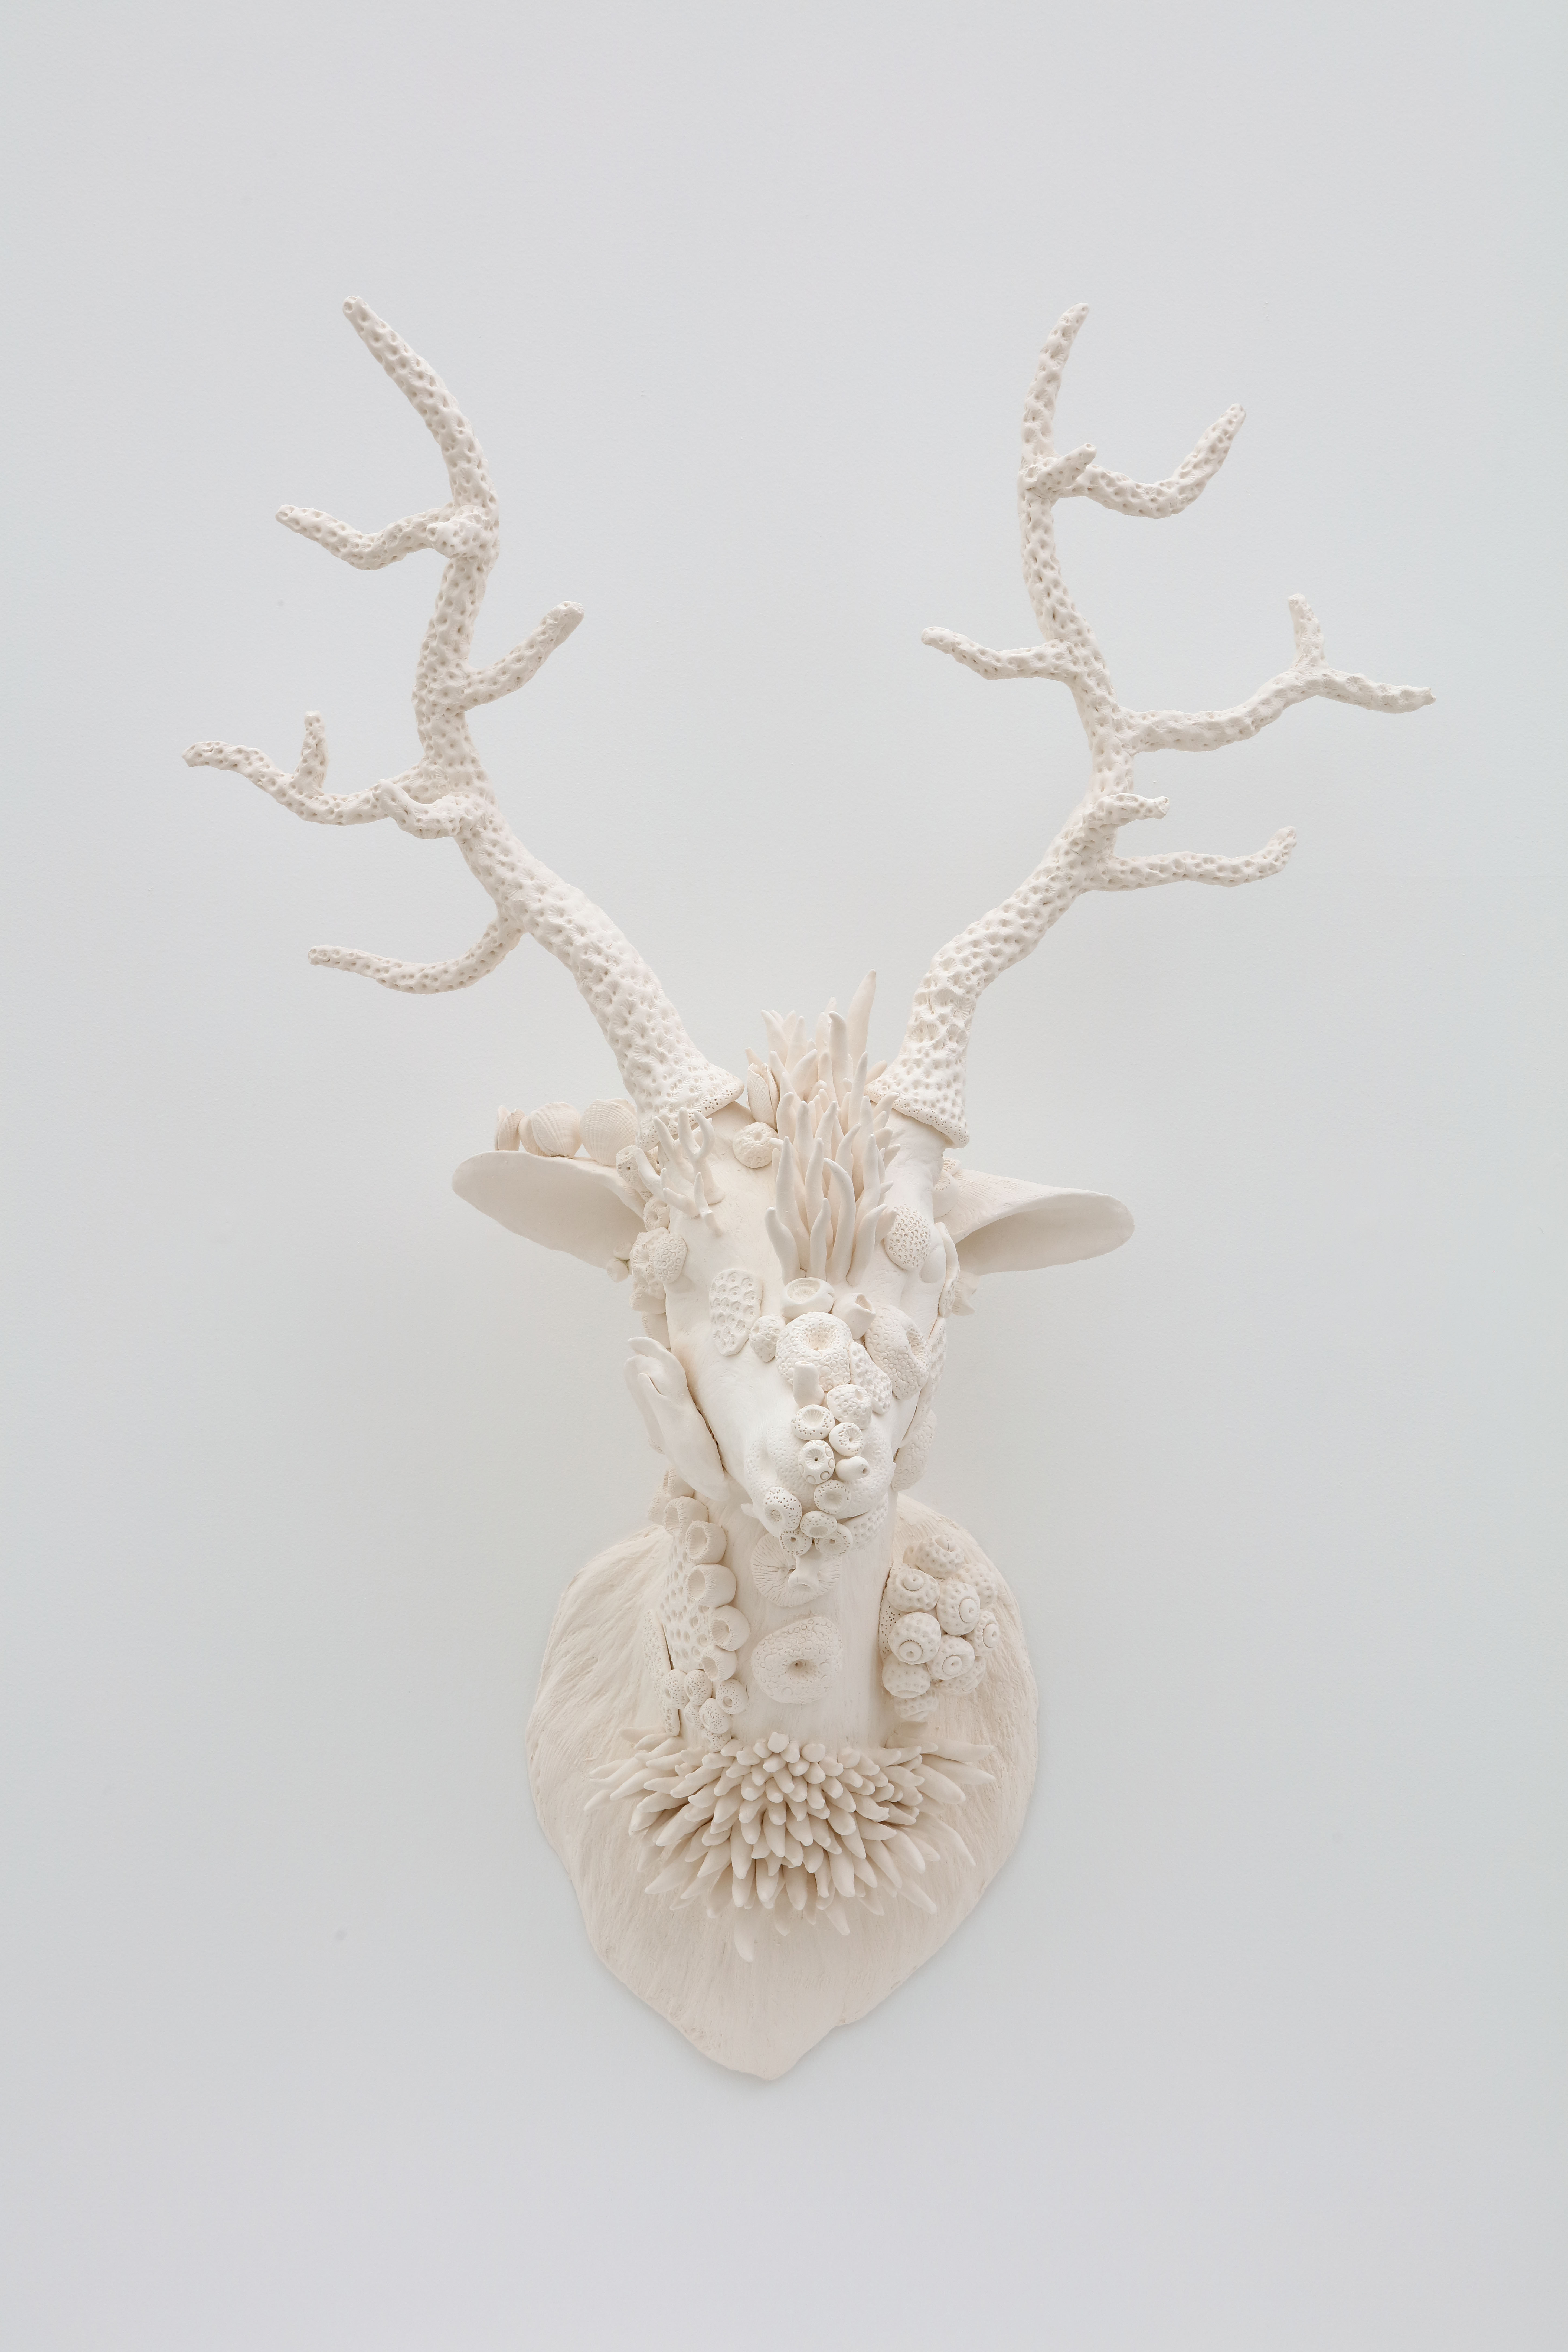 Ken + Julia YONETANI, Dysbiotica – Deer 4 2020, porcelain clay. Photo by MIYAJIMA Kei. ©︎ Ken + Julia Yonetani. Courtesy of Mizuma Art Gallery. 